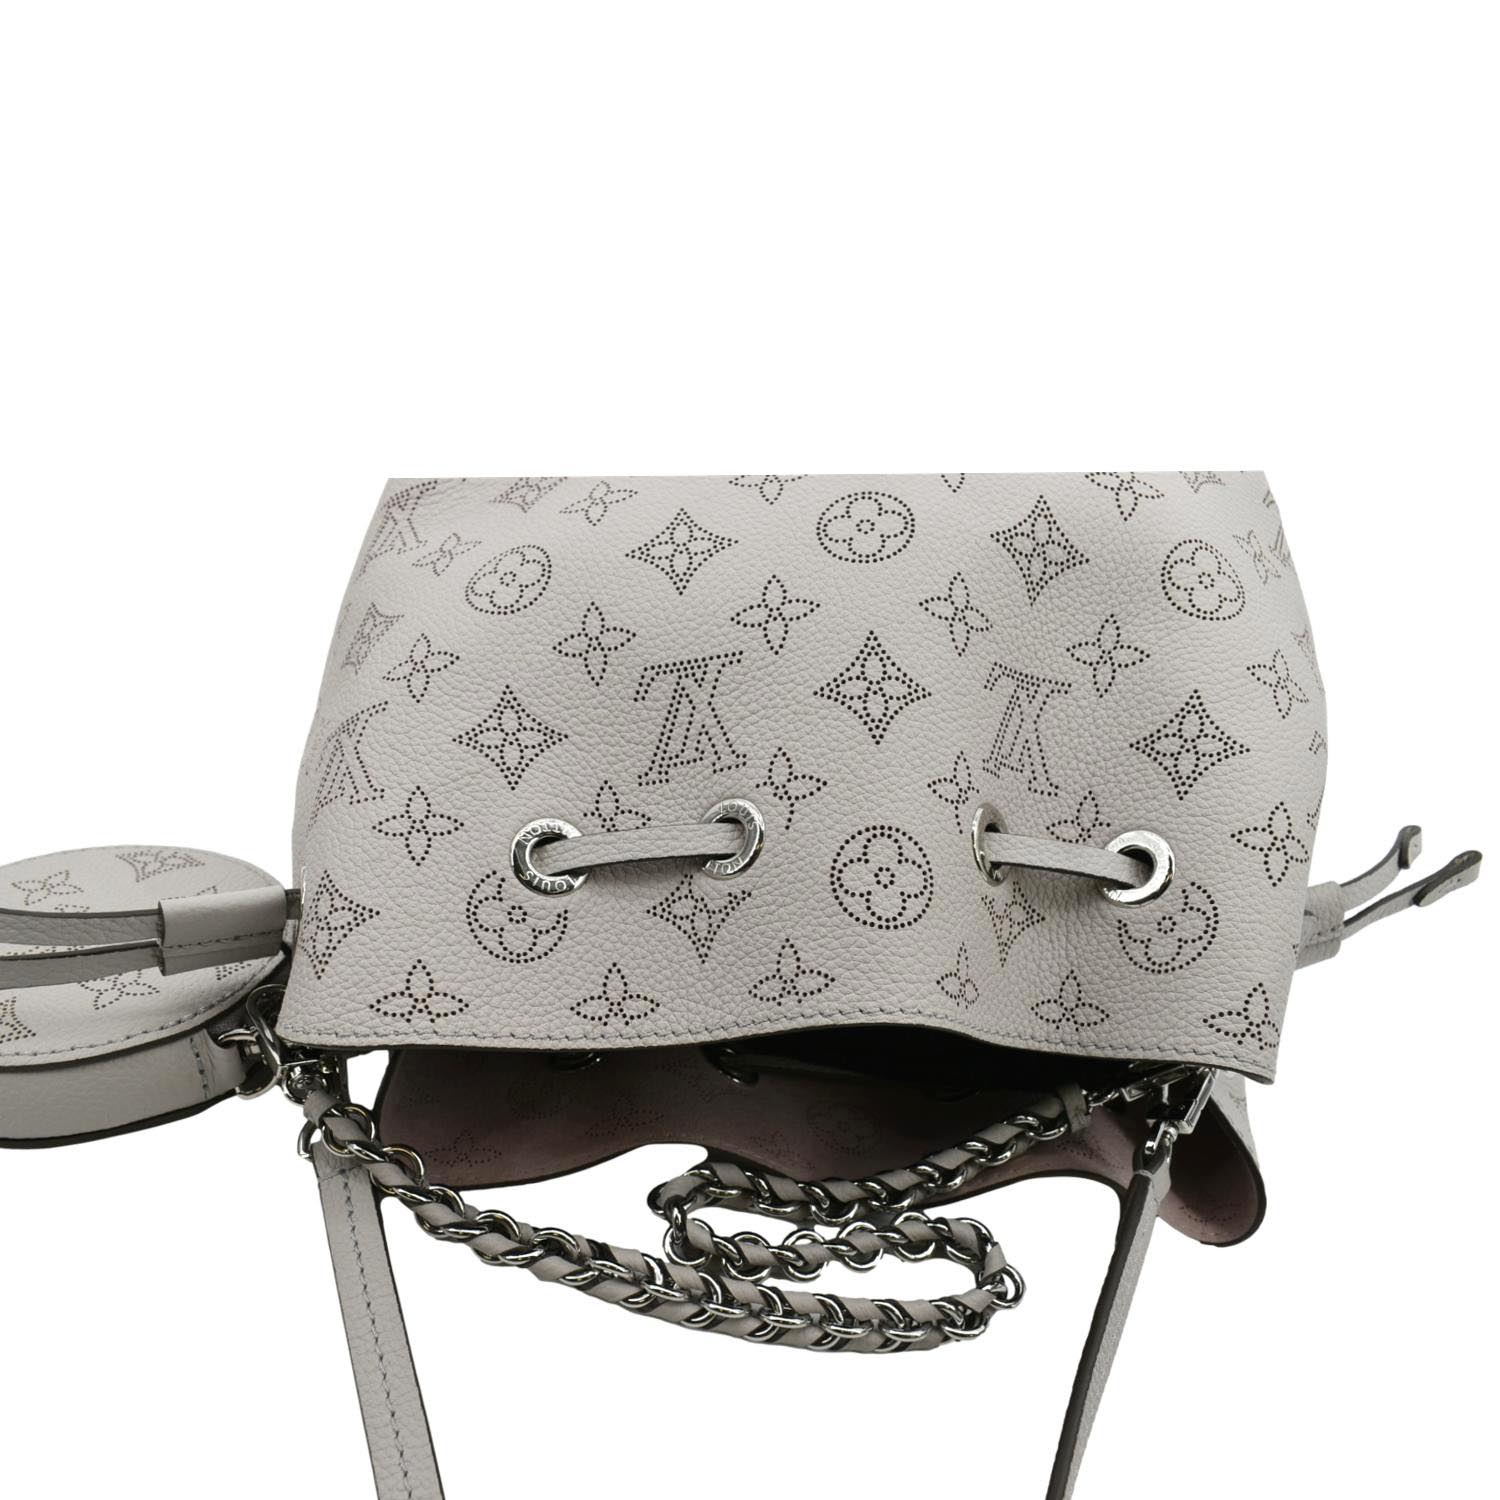 Louis Vuitton Bella Bucket Bag Mahina Leather Pink